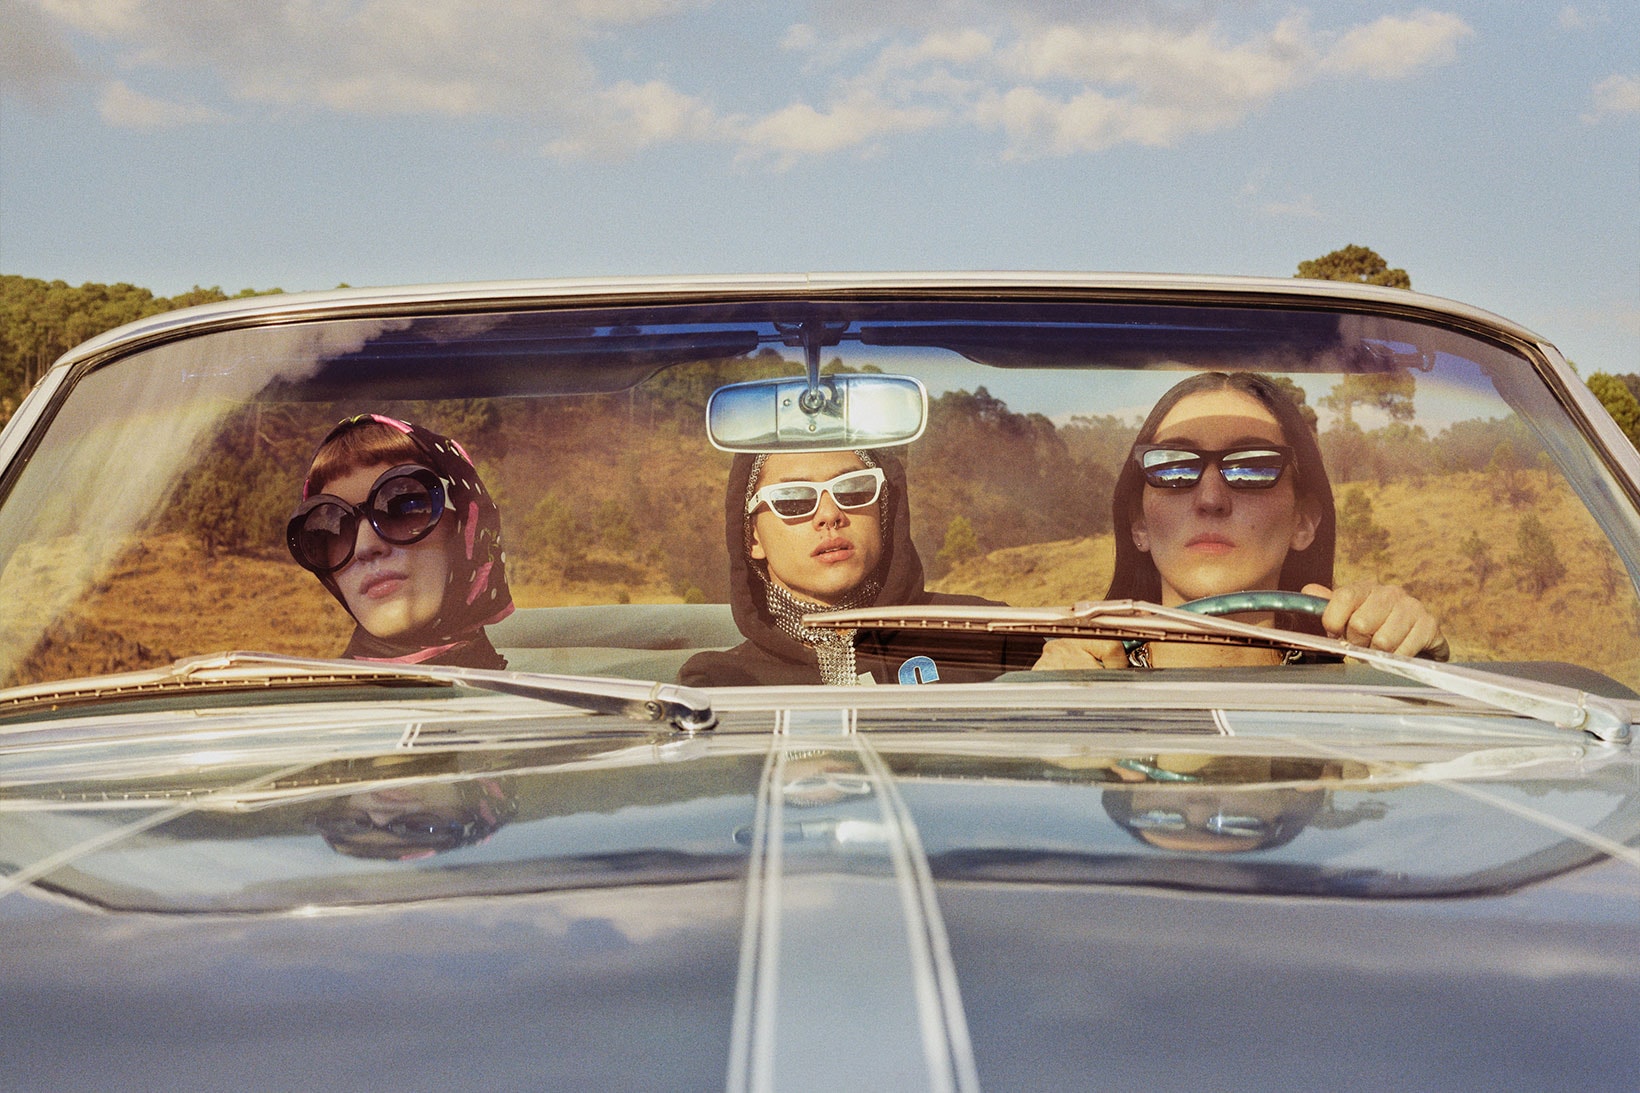 paco rabanne linda farrow eyewear sunglasses collaboration car driving